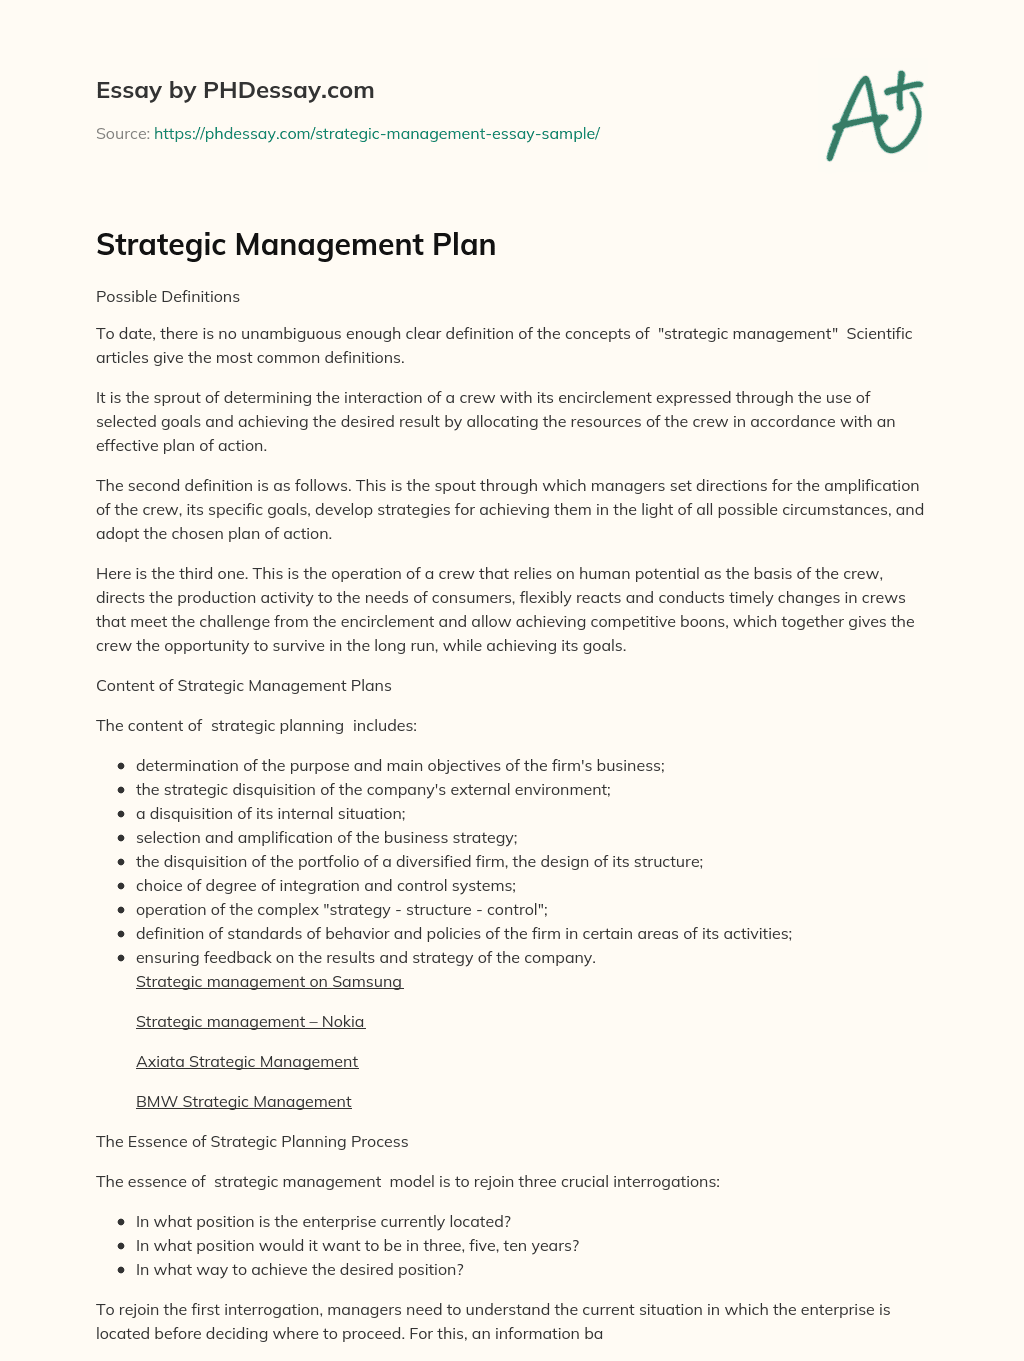 Strategic Management Plan essay